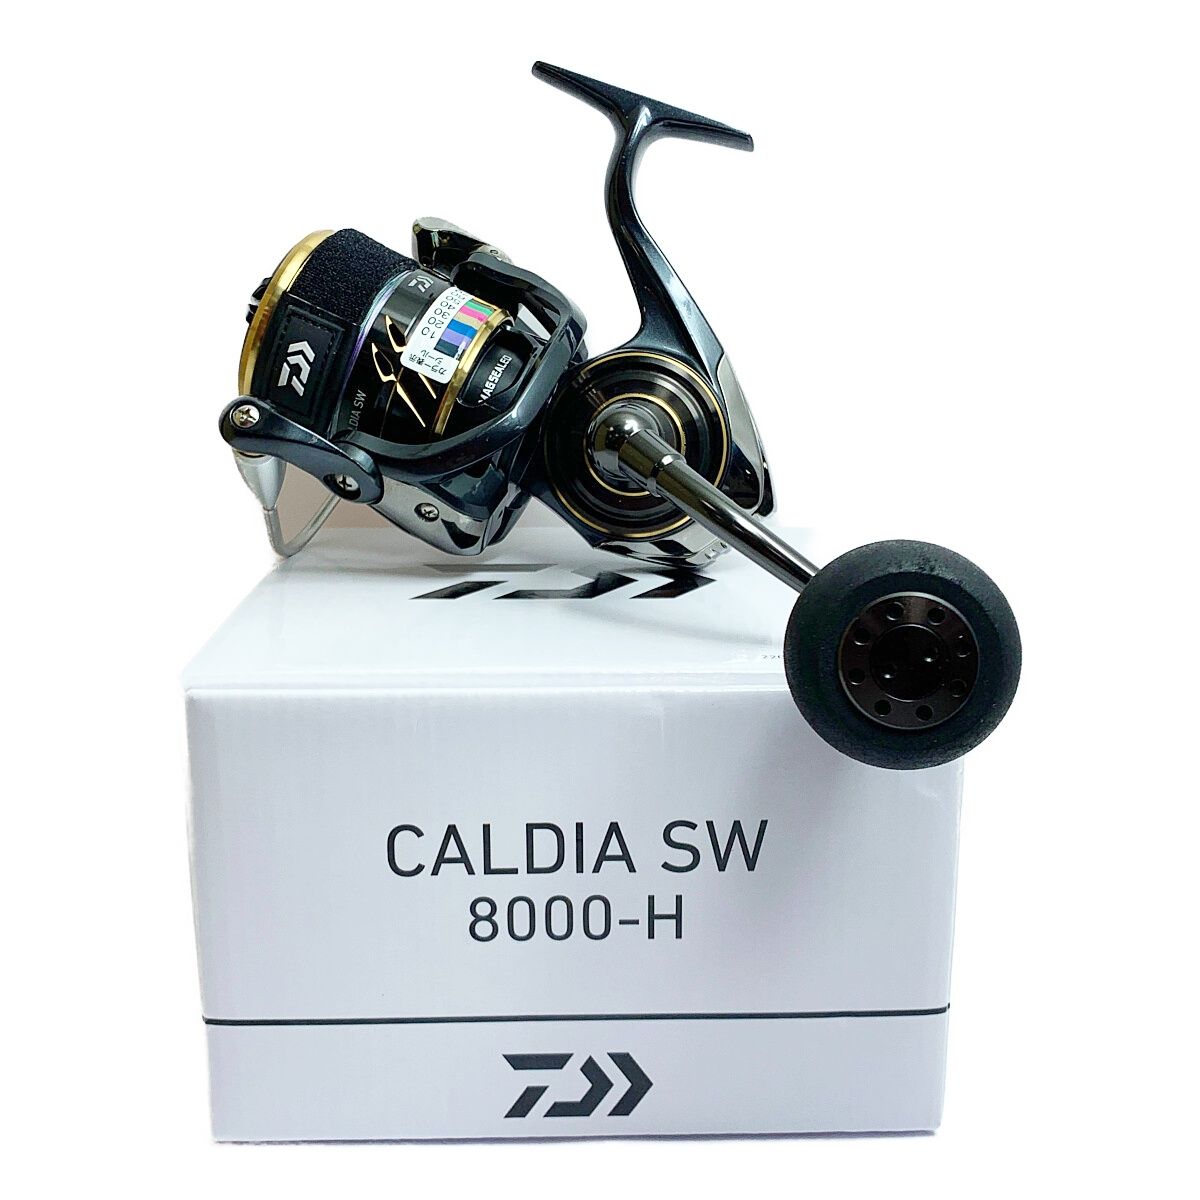 DAIWA ダイワ 22 カルディアSW 8000-H スピニングリール 165764 - メルカリ